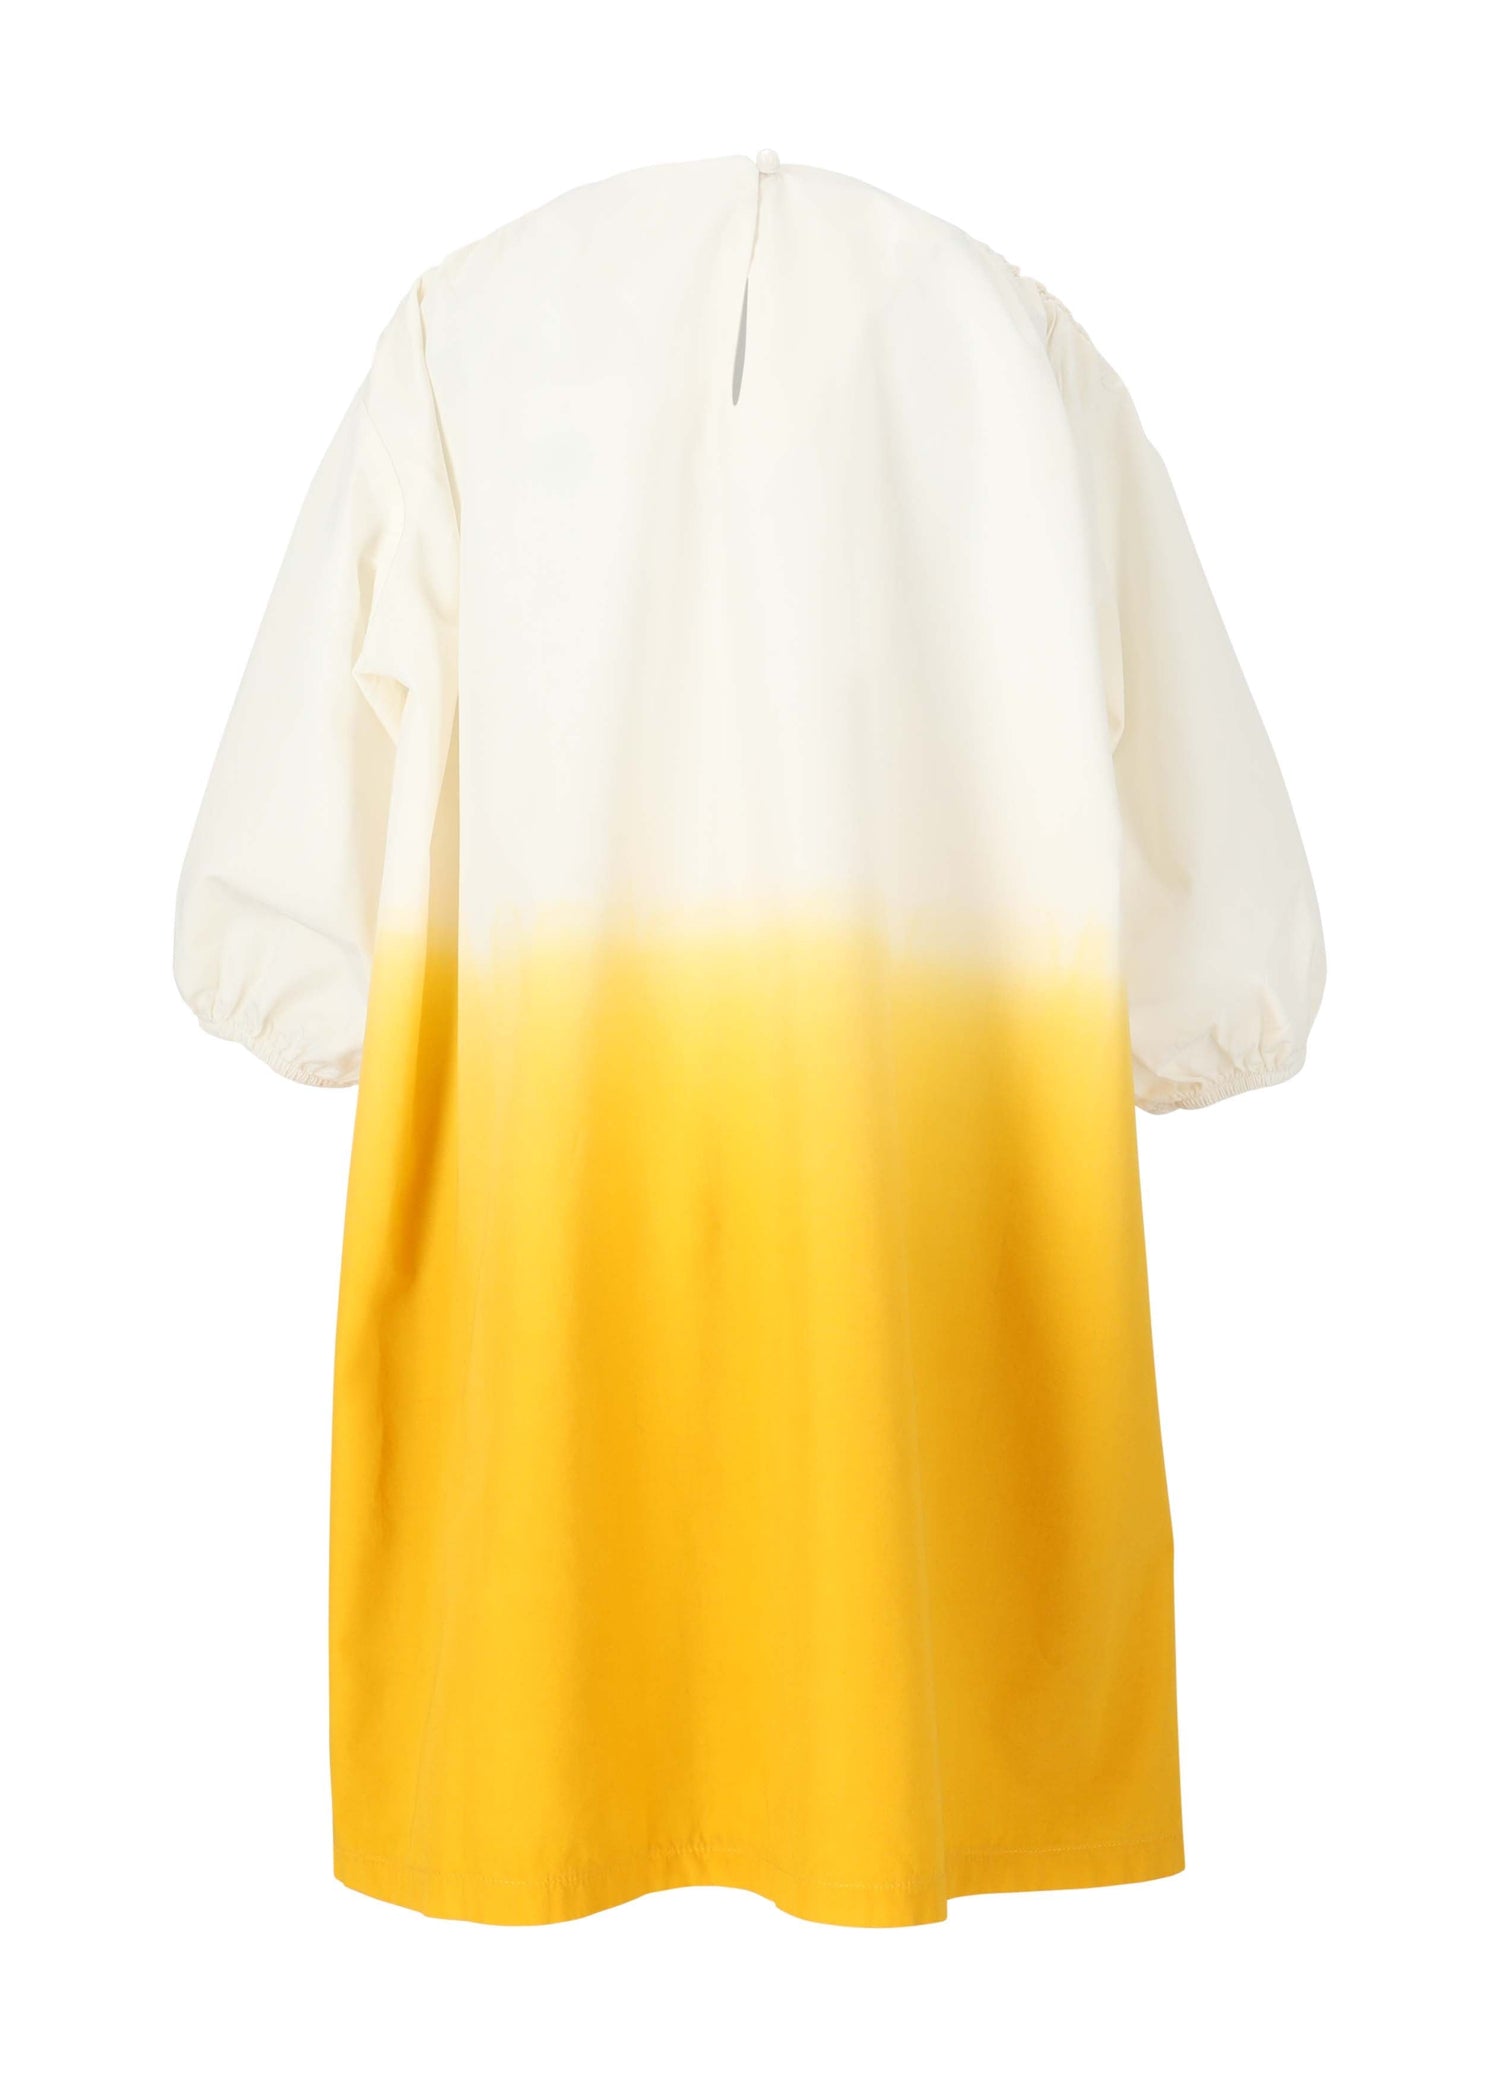 Dress No. 15 - Mineral Yellow Dresses LMN3 